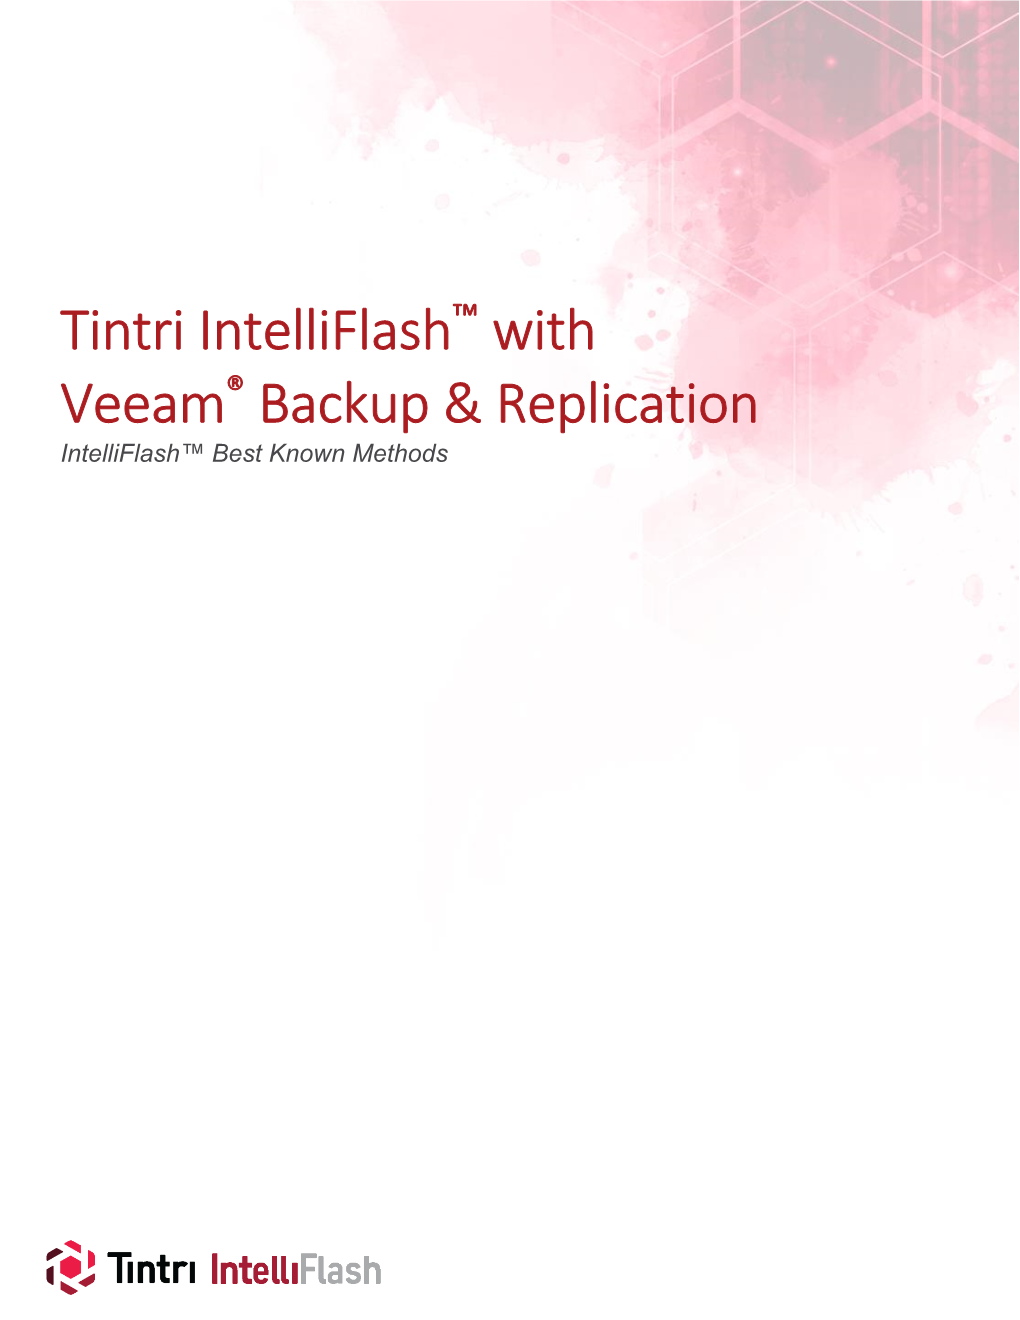 Tintri Intelliflash Best Known Methods – Veeam and Replication